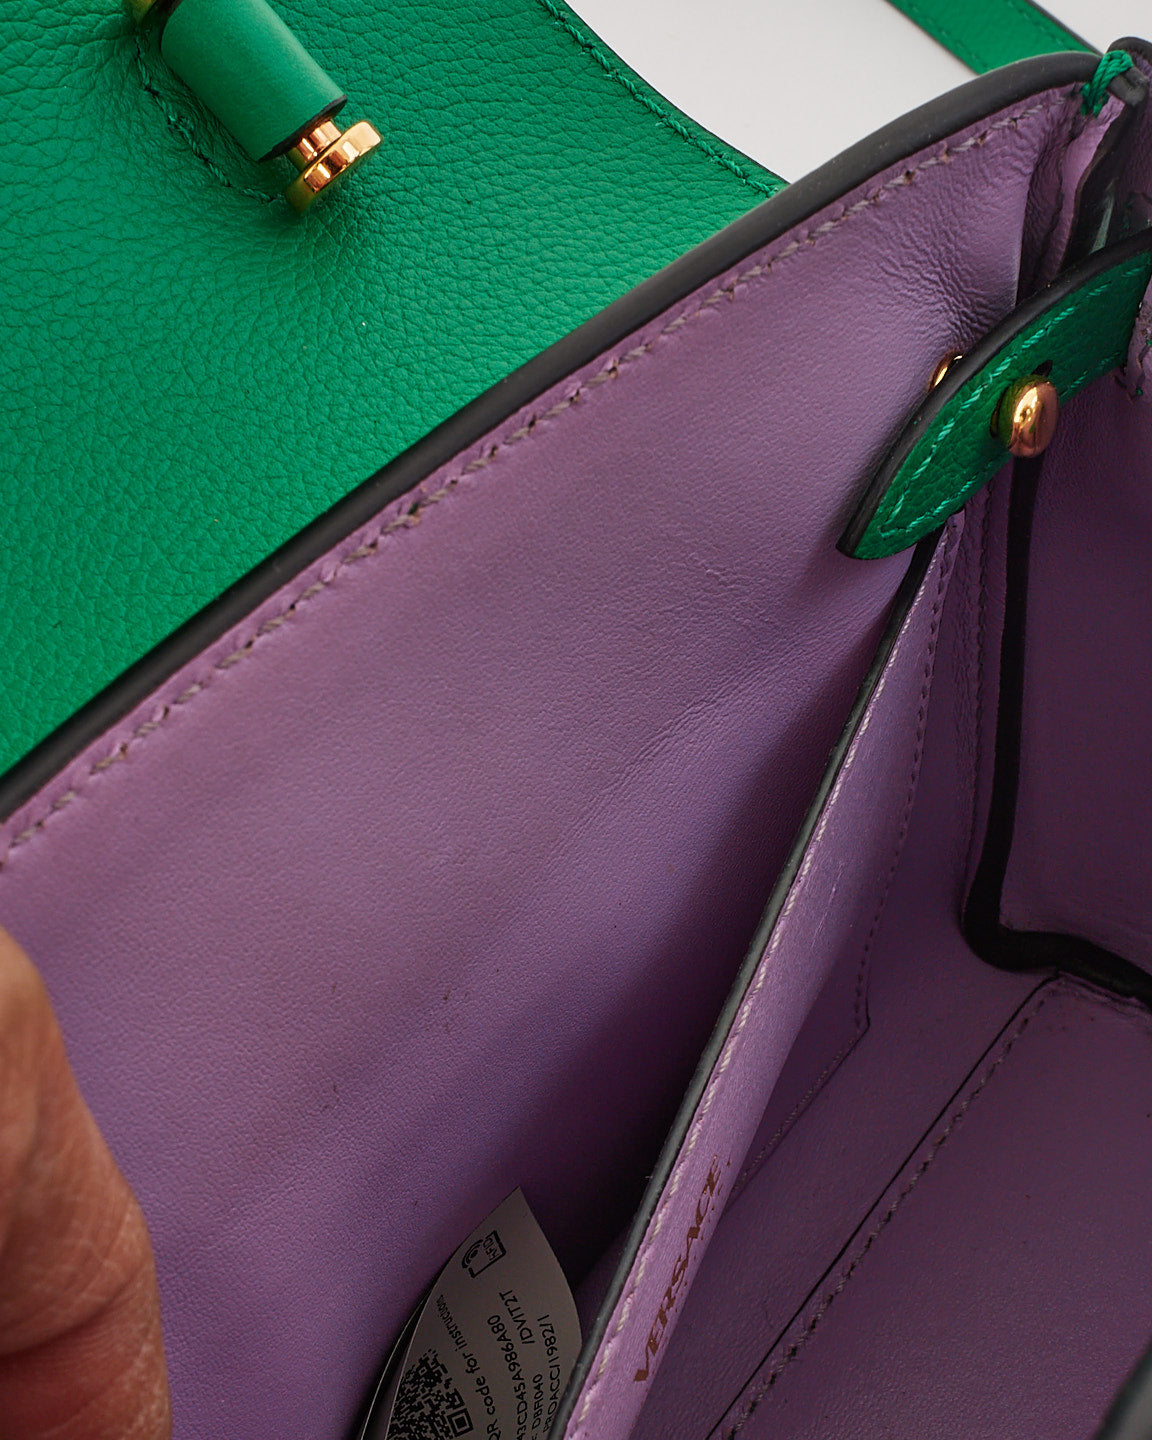 Versace Green Leather La Medusa Top Handle Bag